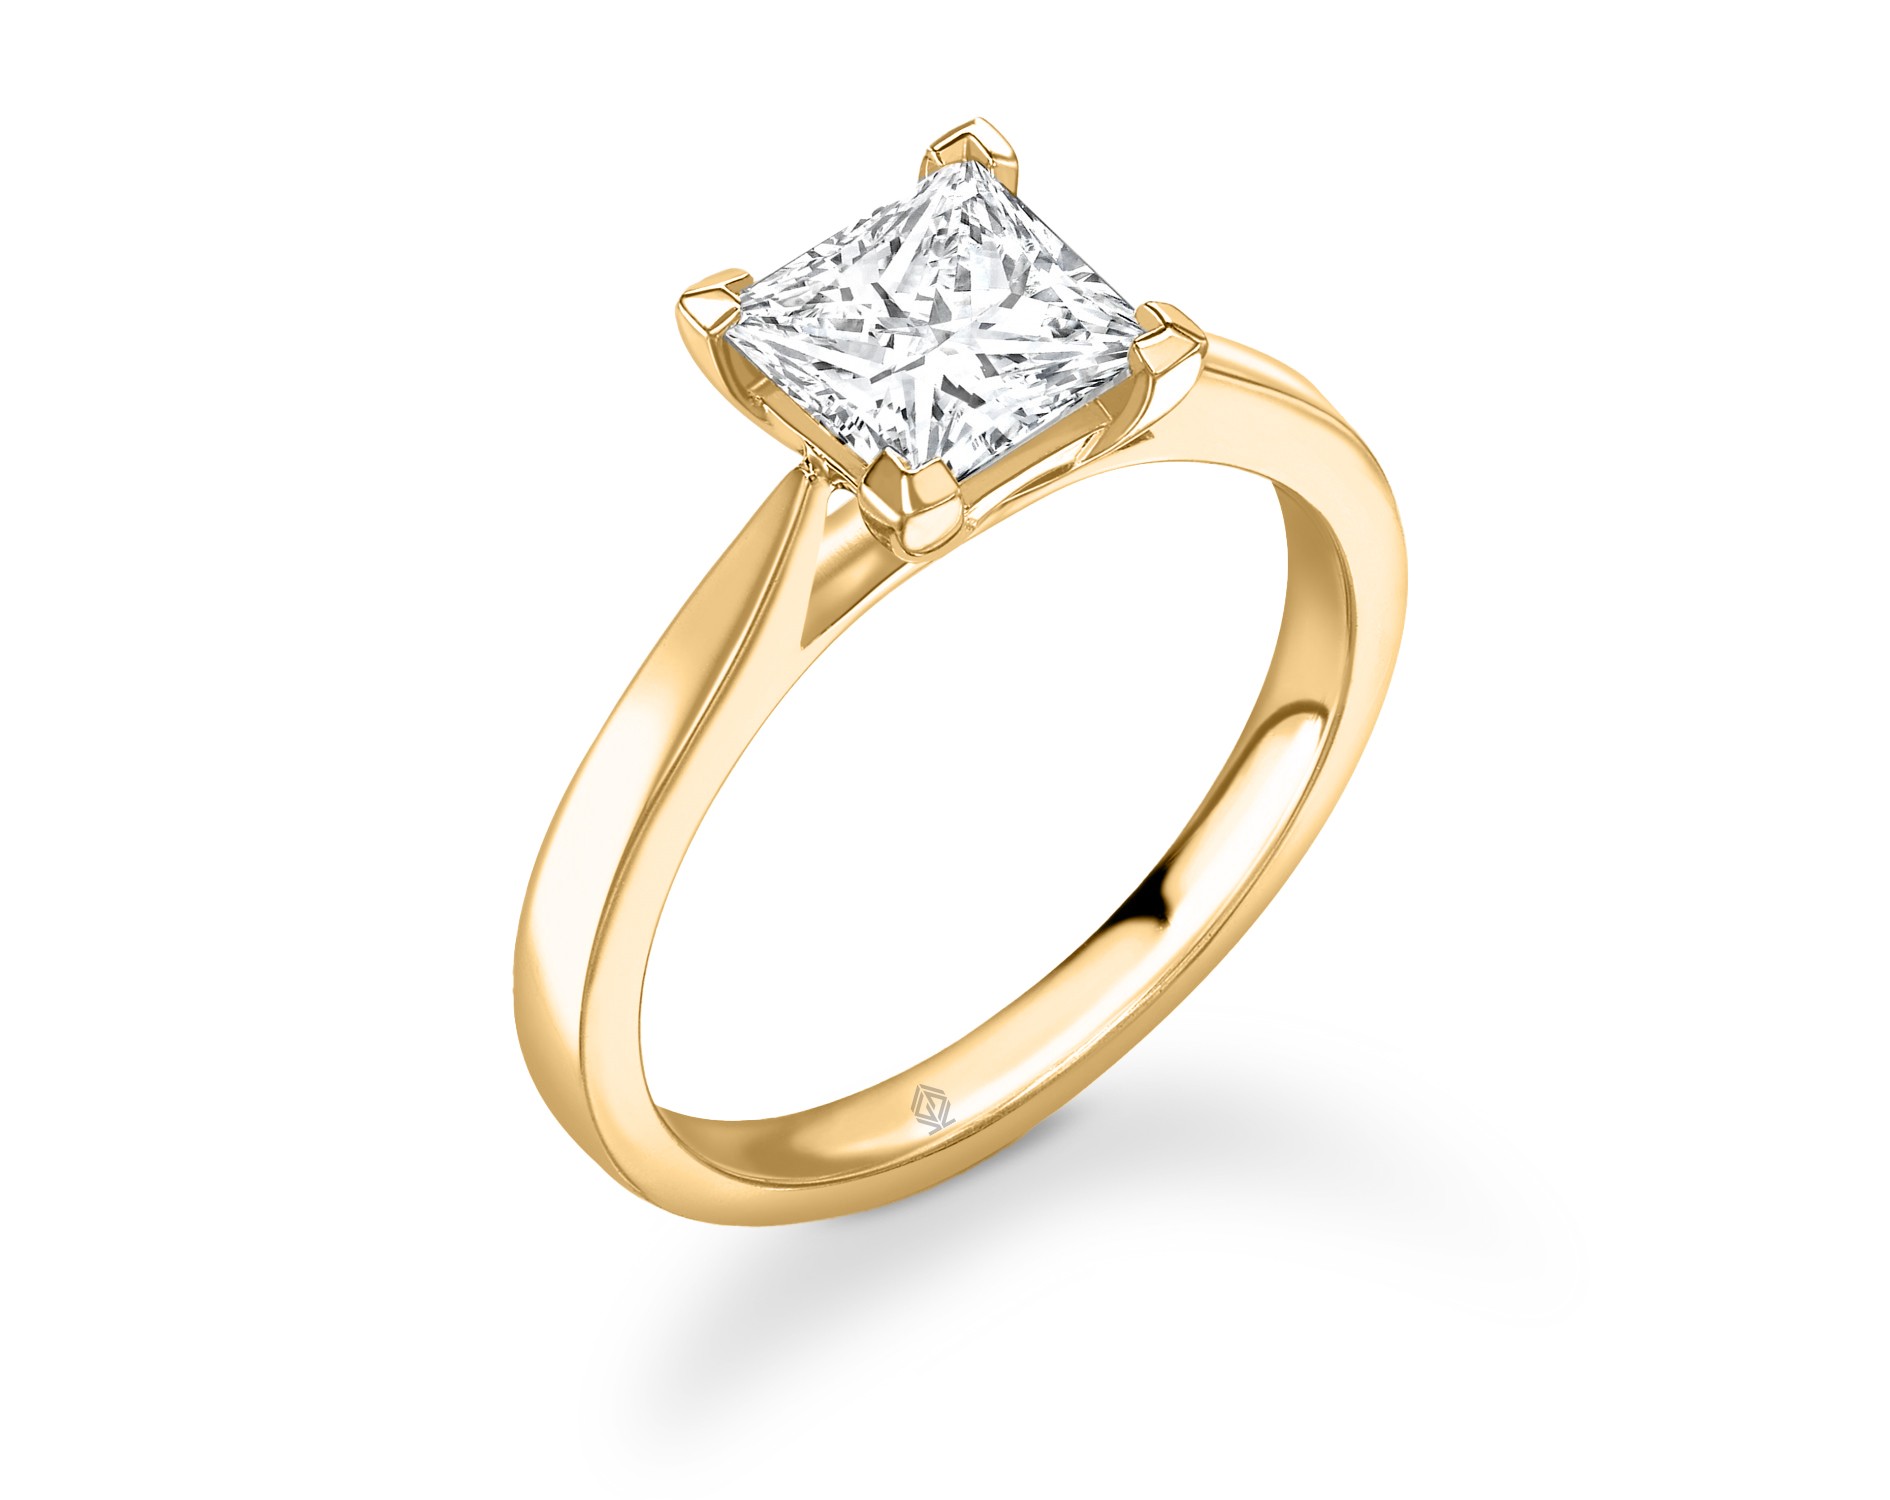 18K YELLOW GOLD 4 PRONGS PRINCESS CUT DIAMOND ENGAGEMENT RING